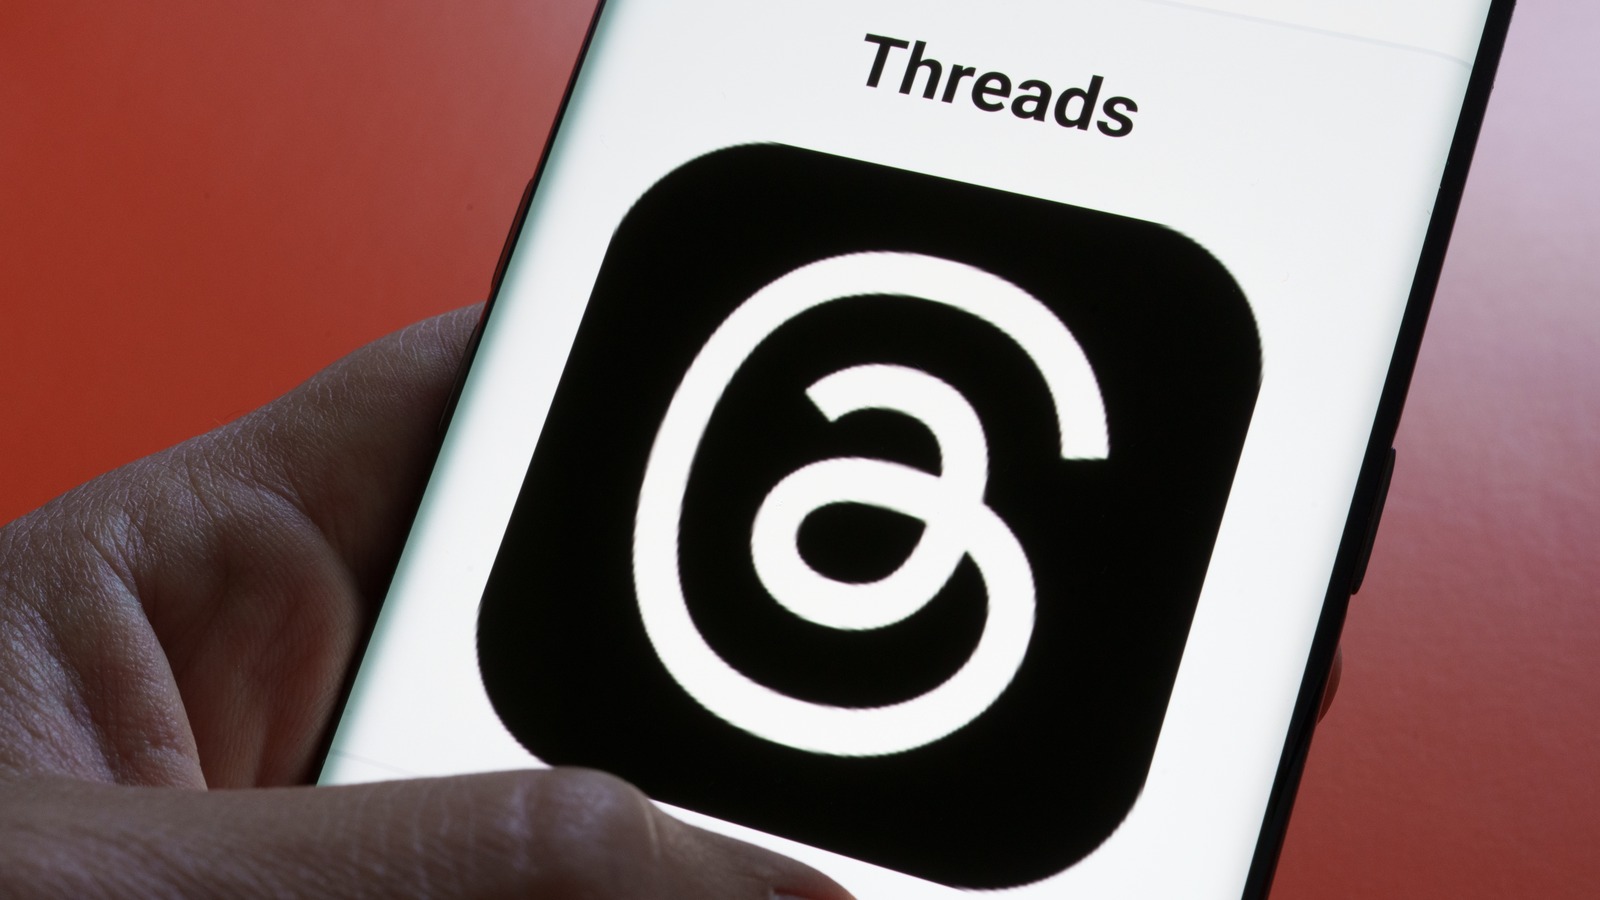 Threads Engagement Reportedly Stumbles After Impressive Start – SlashGear